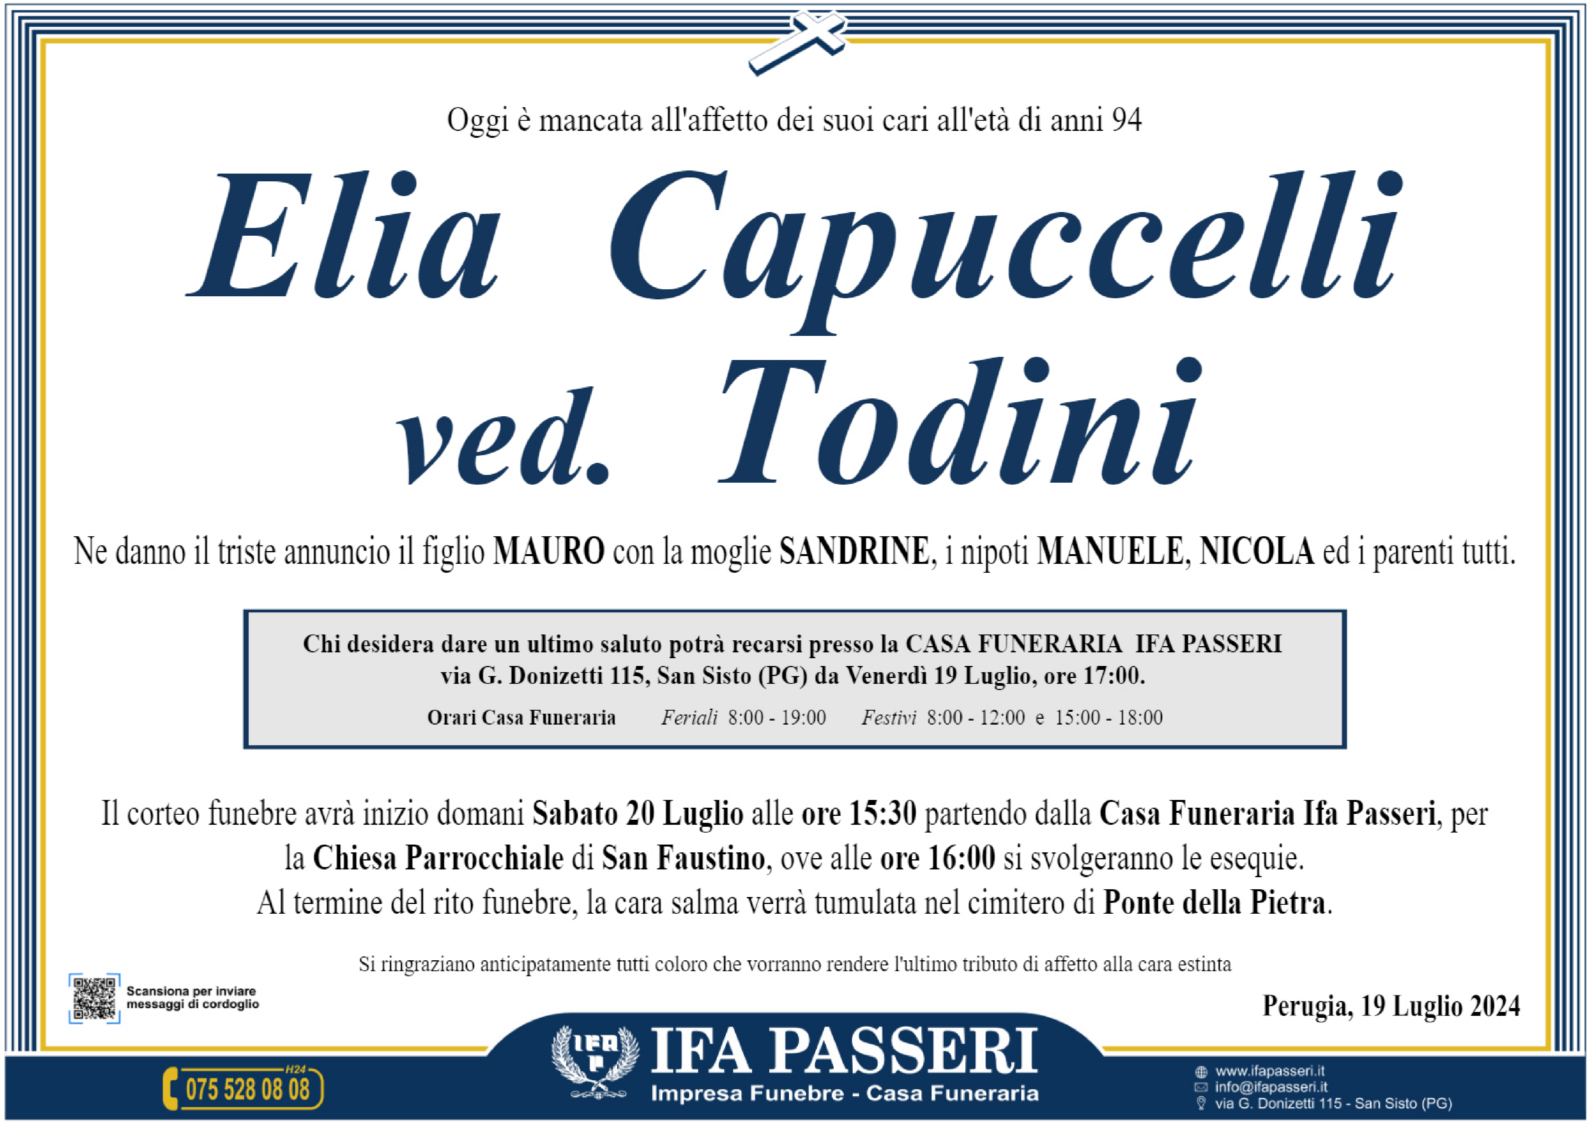 Elia Capuccelli ved. Todini